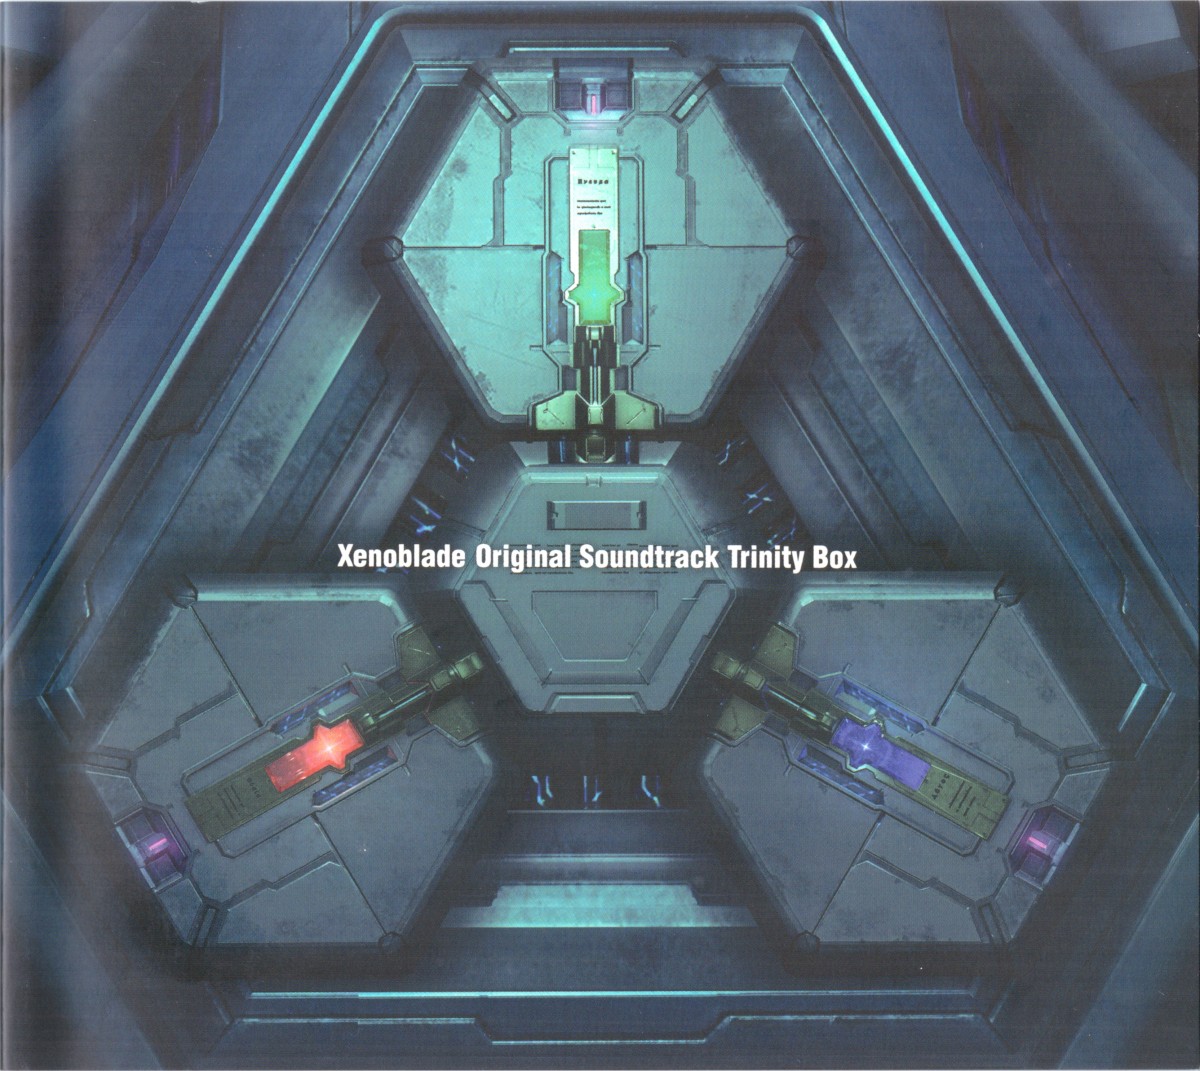 Release “ゼノブレイド オリジナル・サウンドトラック トリニティBOX